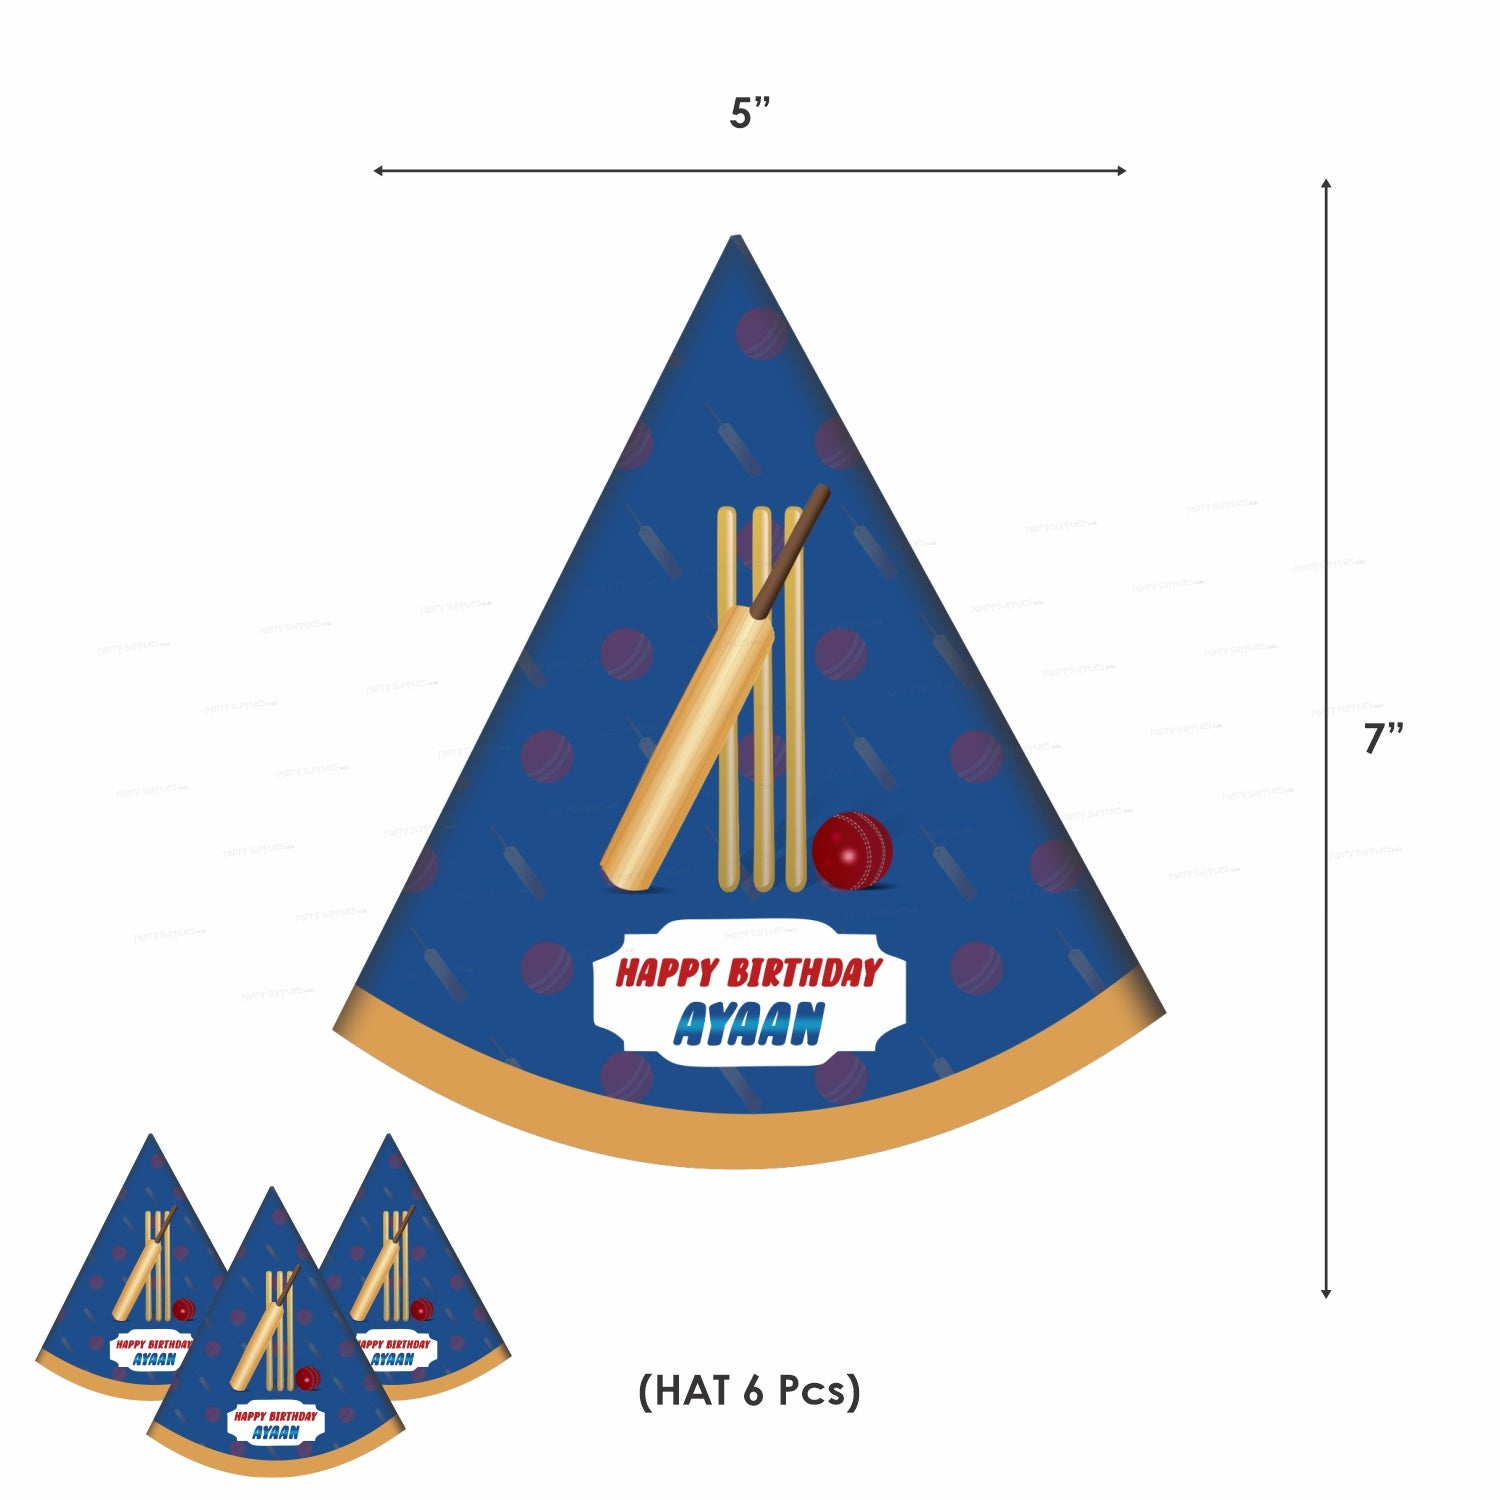 PSI Cricket Theme Preferred Kit